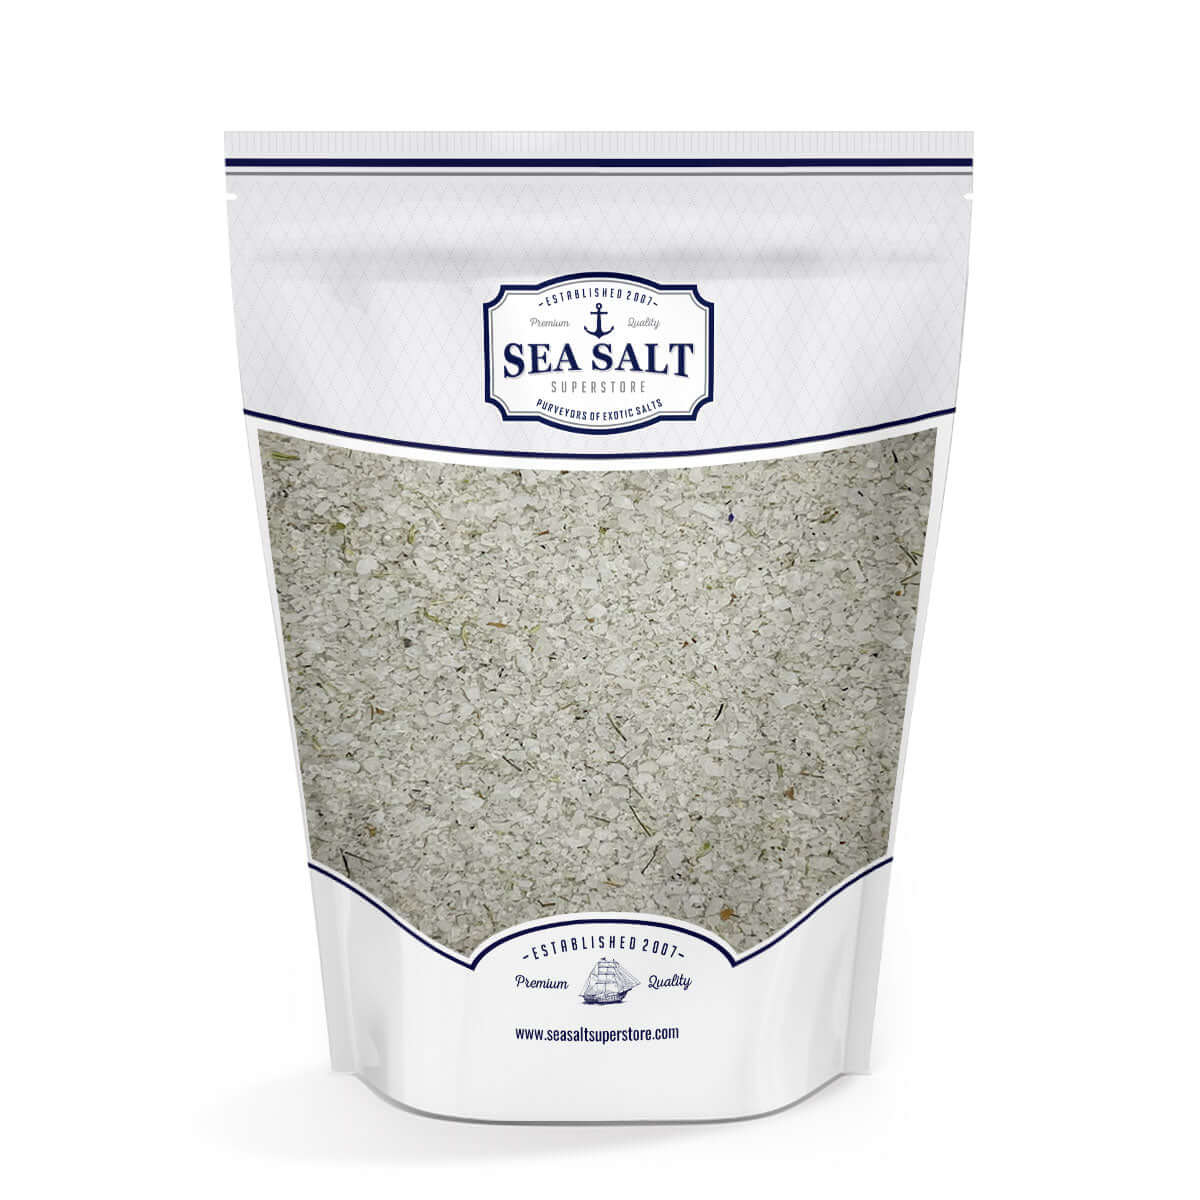 Lavender Sea Salt by Sea Salt Superstore - 40 lbs Finishing Salts